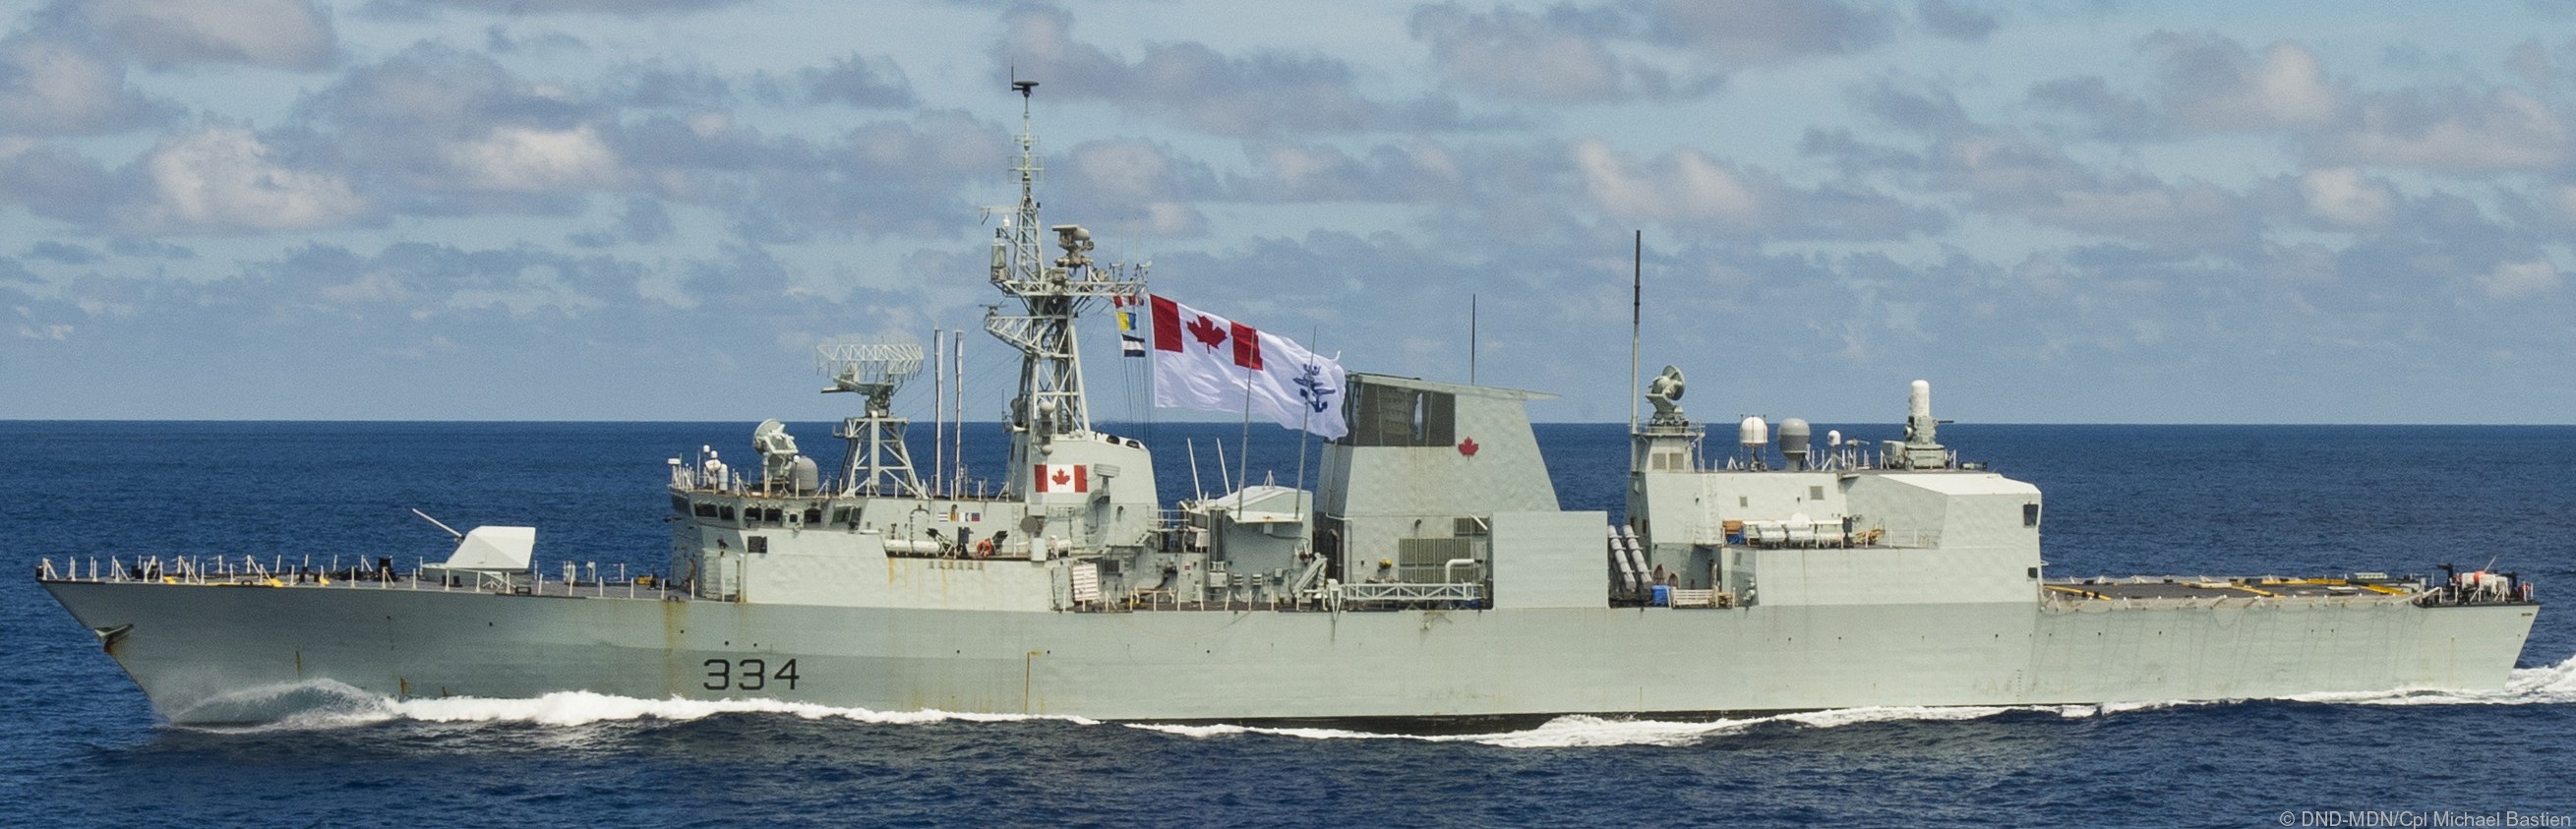 ffh-334 hmcs regina halifax class helicopter patrol frigate ncsm royal canadian navy 68